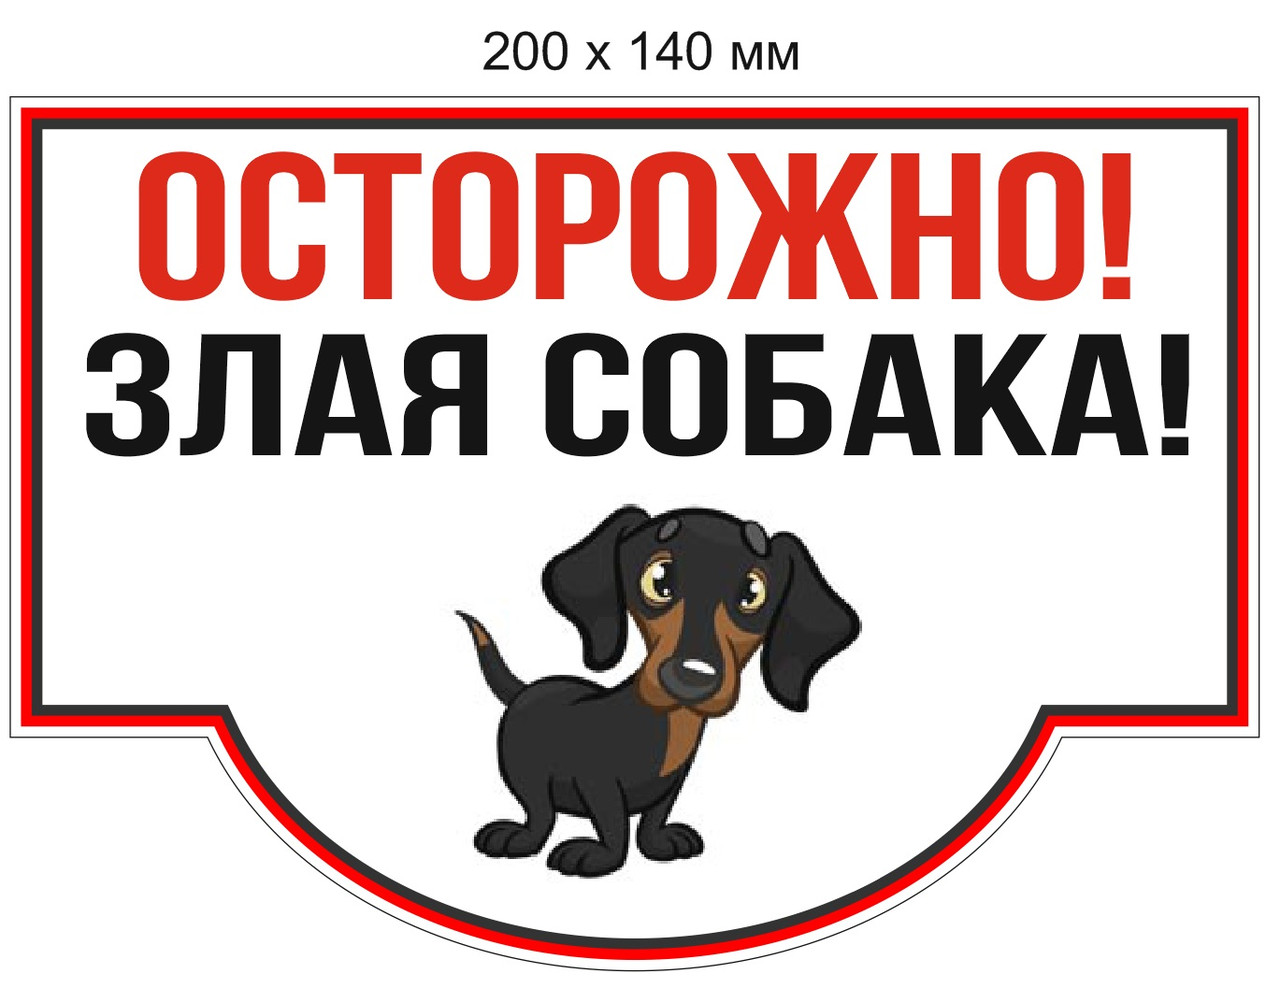 Табличка (200 х 140 мм) "Осторожно! Злая собака". Минимальный заказ - 3 шт. (Цена указана за 1 шт.)